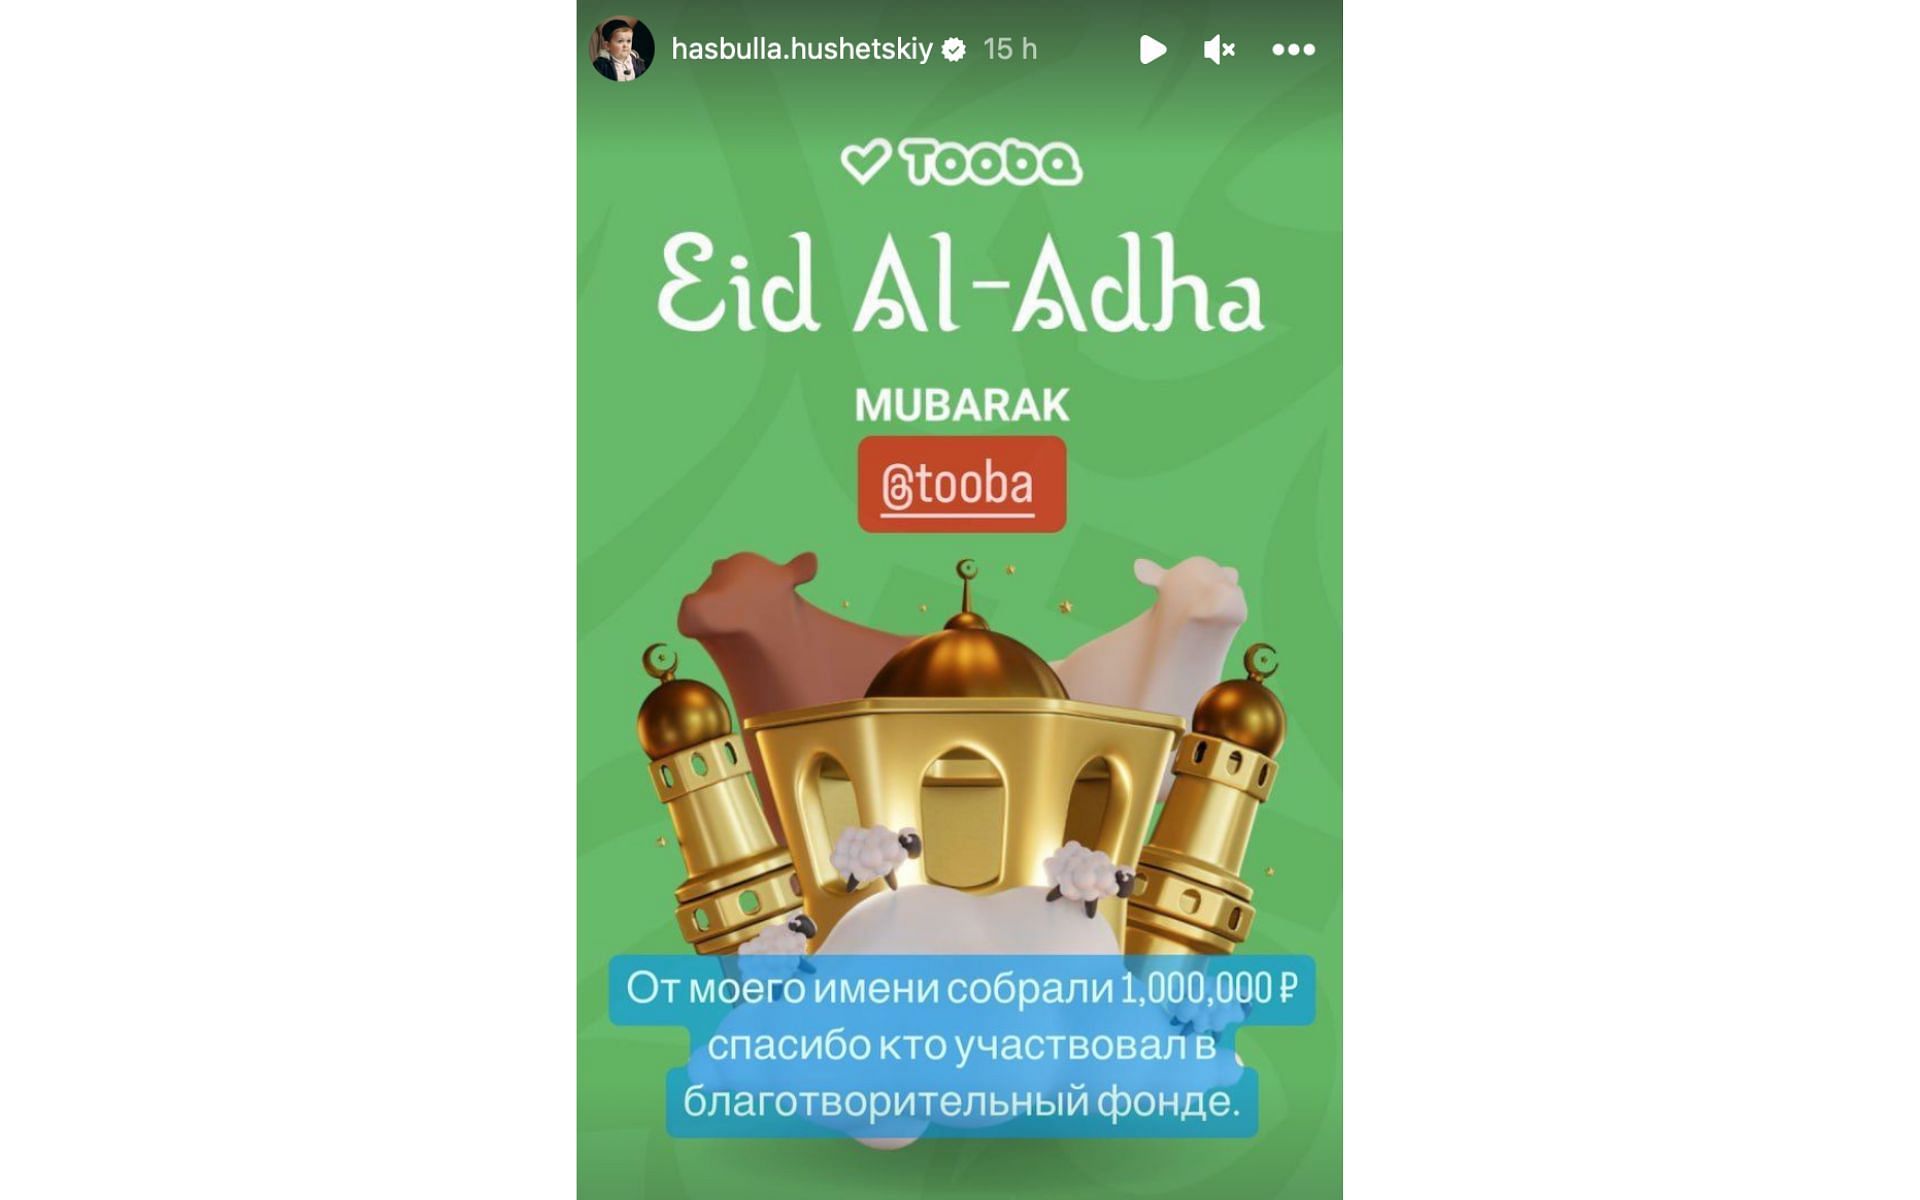 Hasbulla Magomedov&#039;s Instagram story wishing fans Eid Mubarak and announcing charity fund results [via Instagram @hasbulla.hushetskiy]